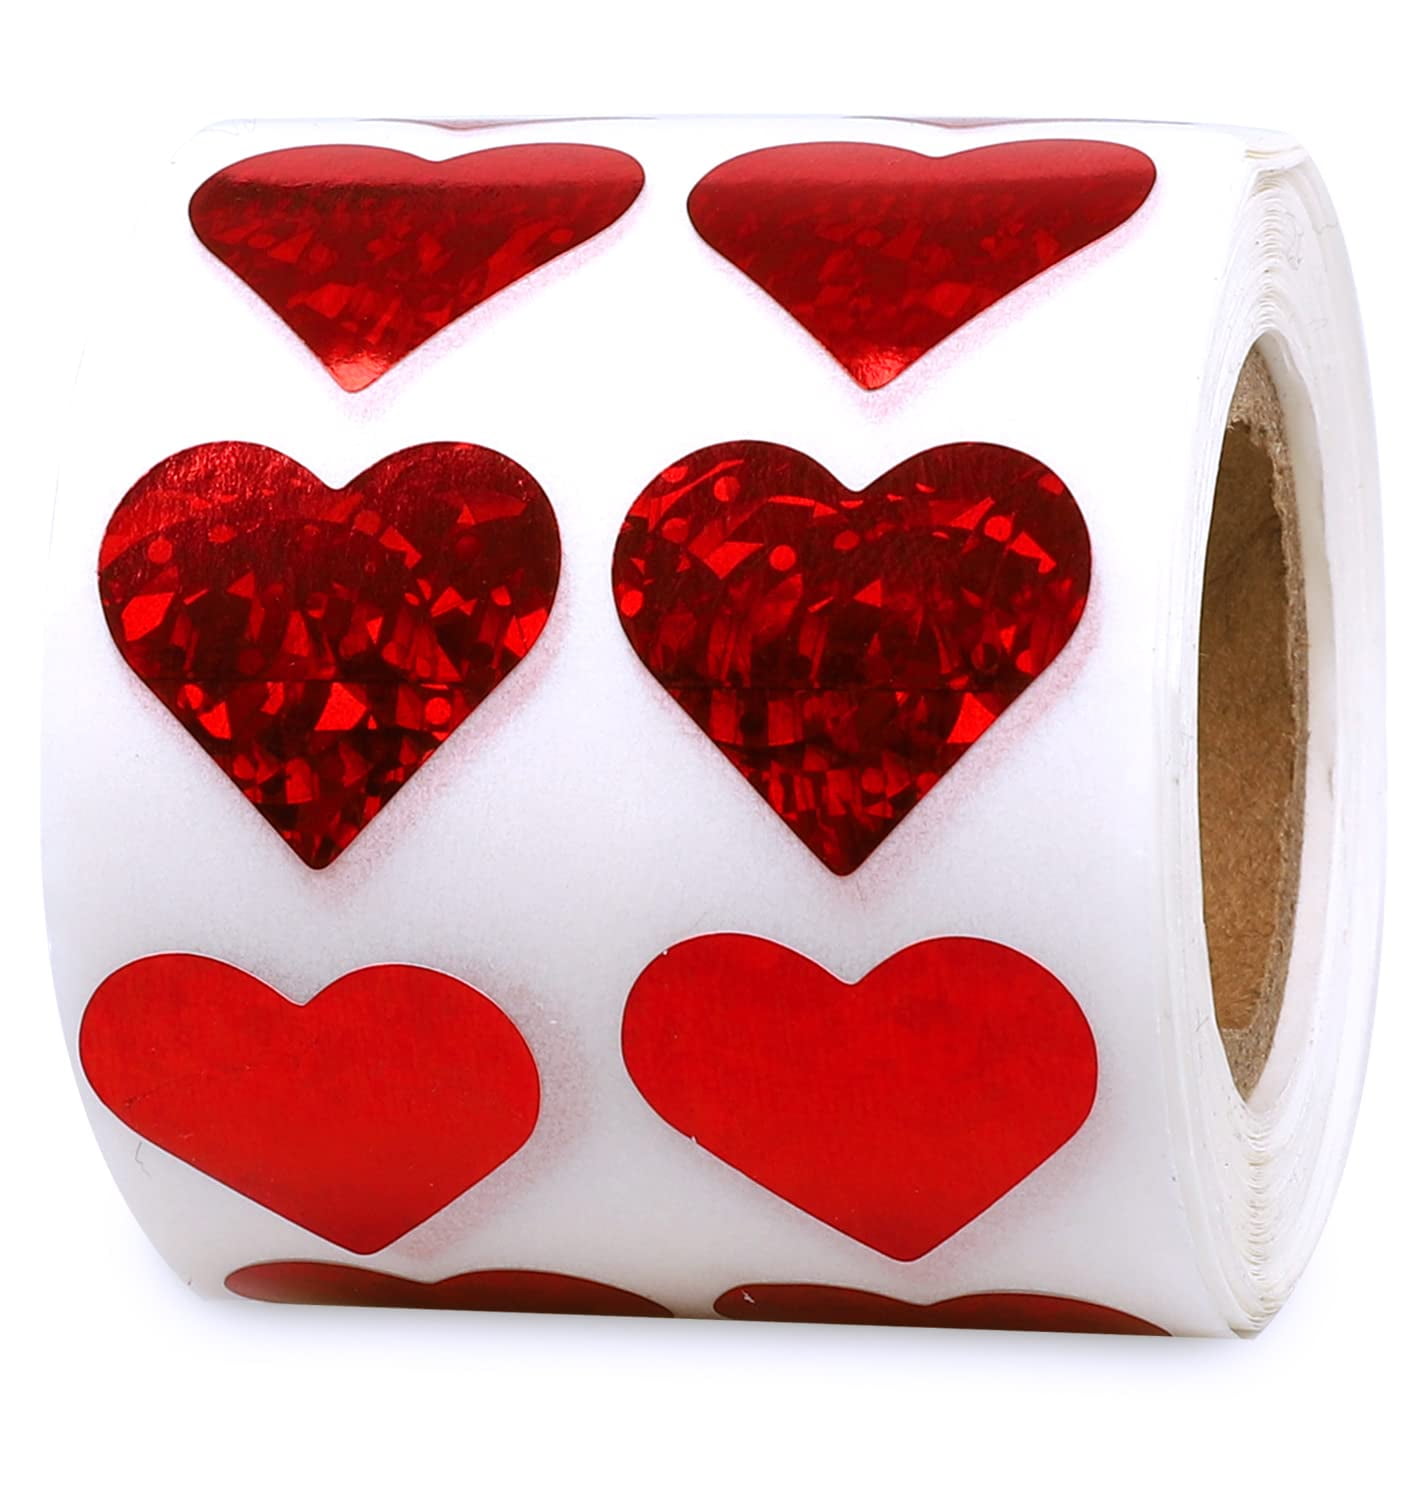 KALLORY 610pcs Love Stickers Valentines Day Heart Stickers Heart Shaped  Stickers Self Adhesive Foam Hearts Wedding Decorations Mini Heart Stickers